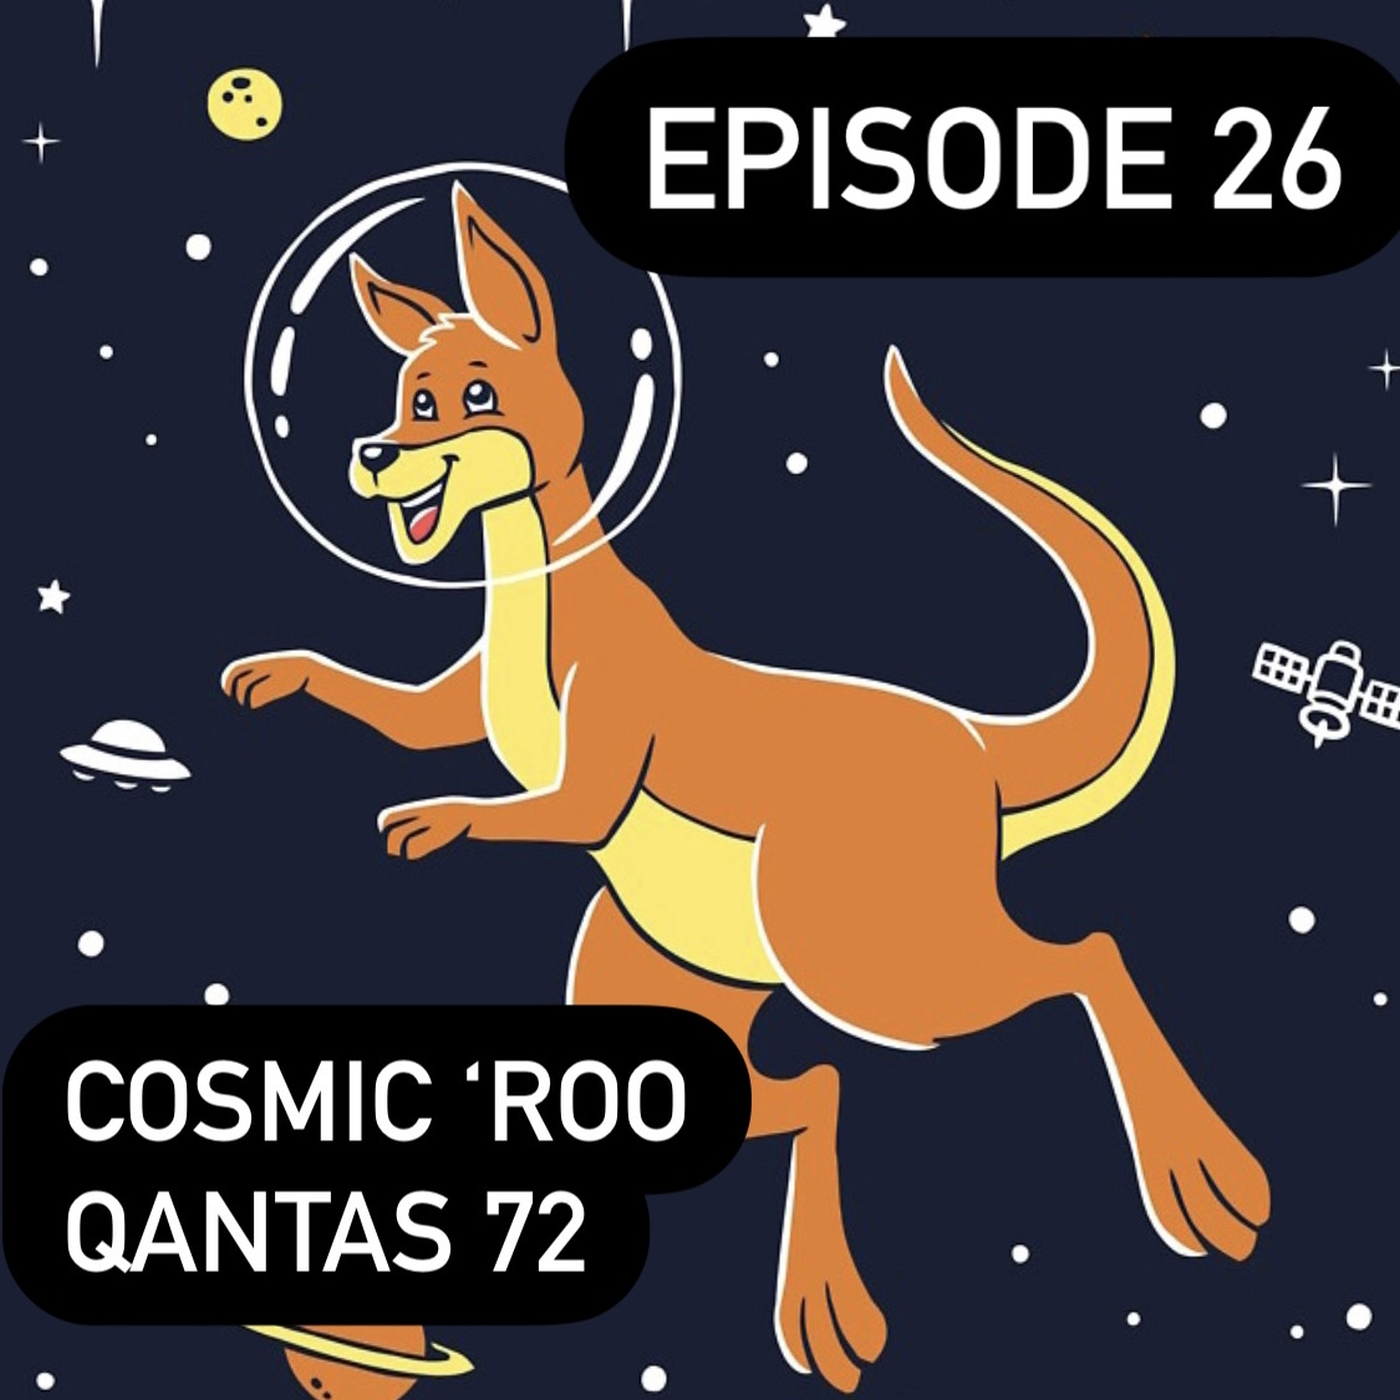 26. Cosmic 'Roo - Qantas 72